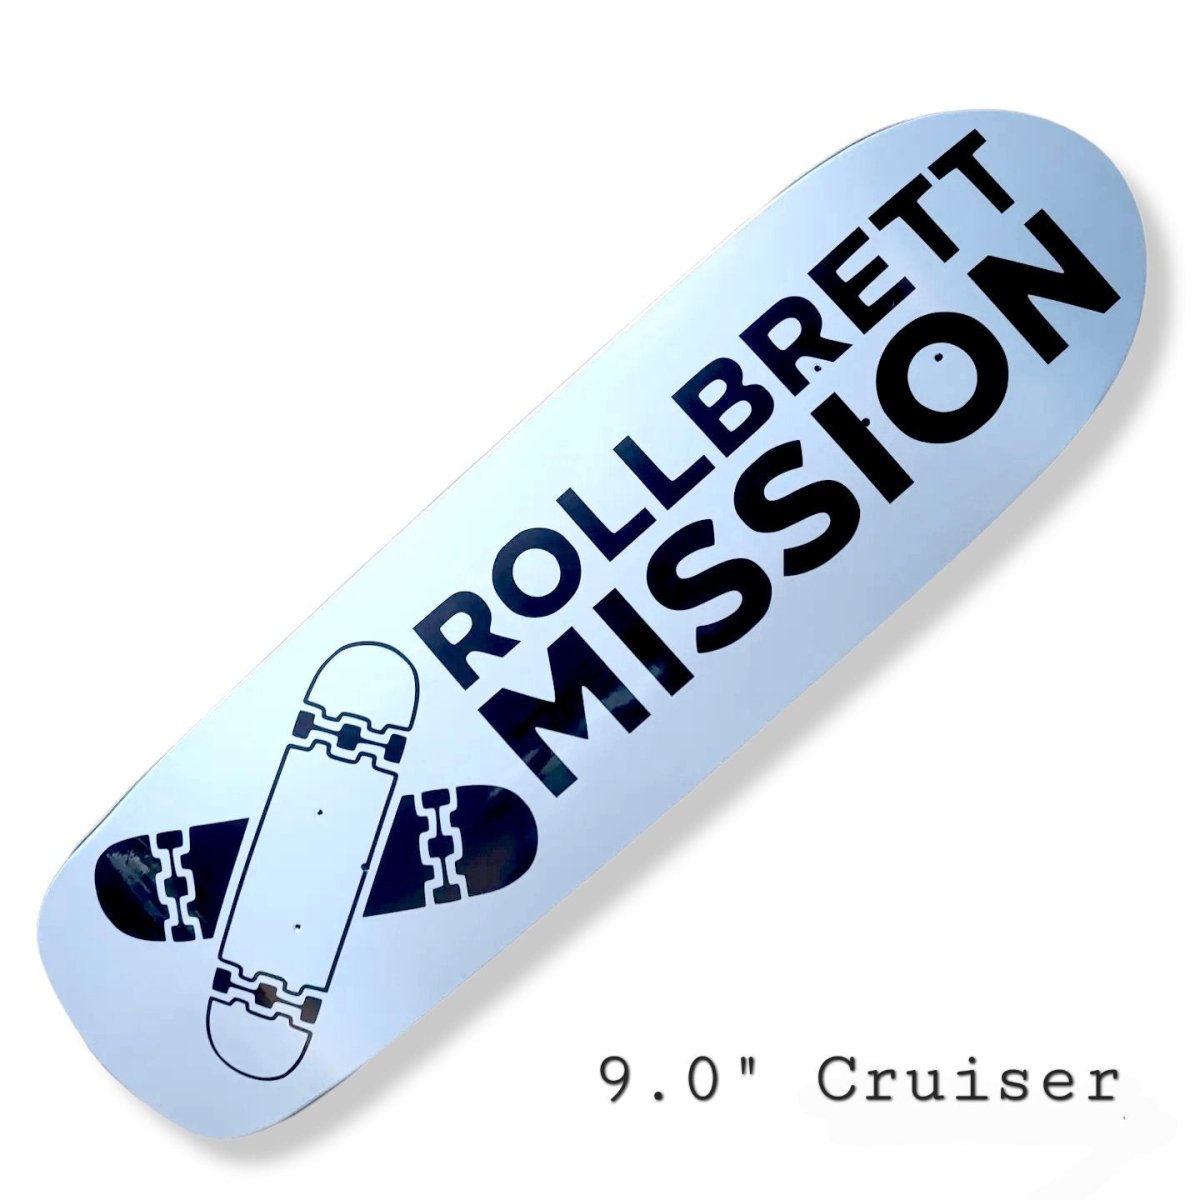 Rollbrett Mission Classic Logo Cruiser Deck 9.0" - Skateboard-Decks - Rollbrett Mission